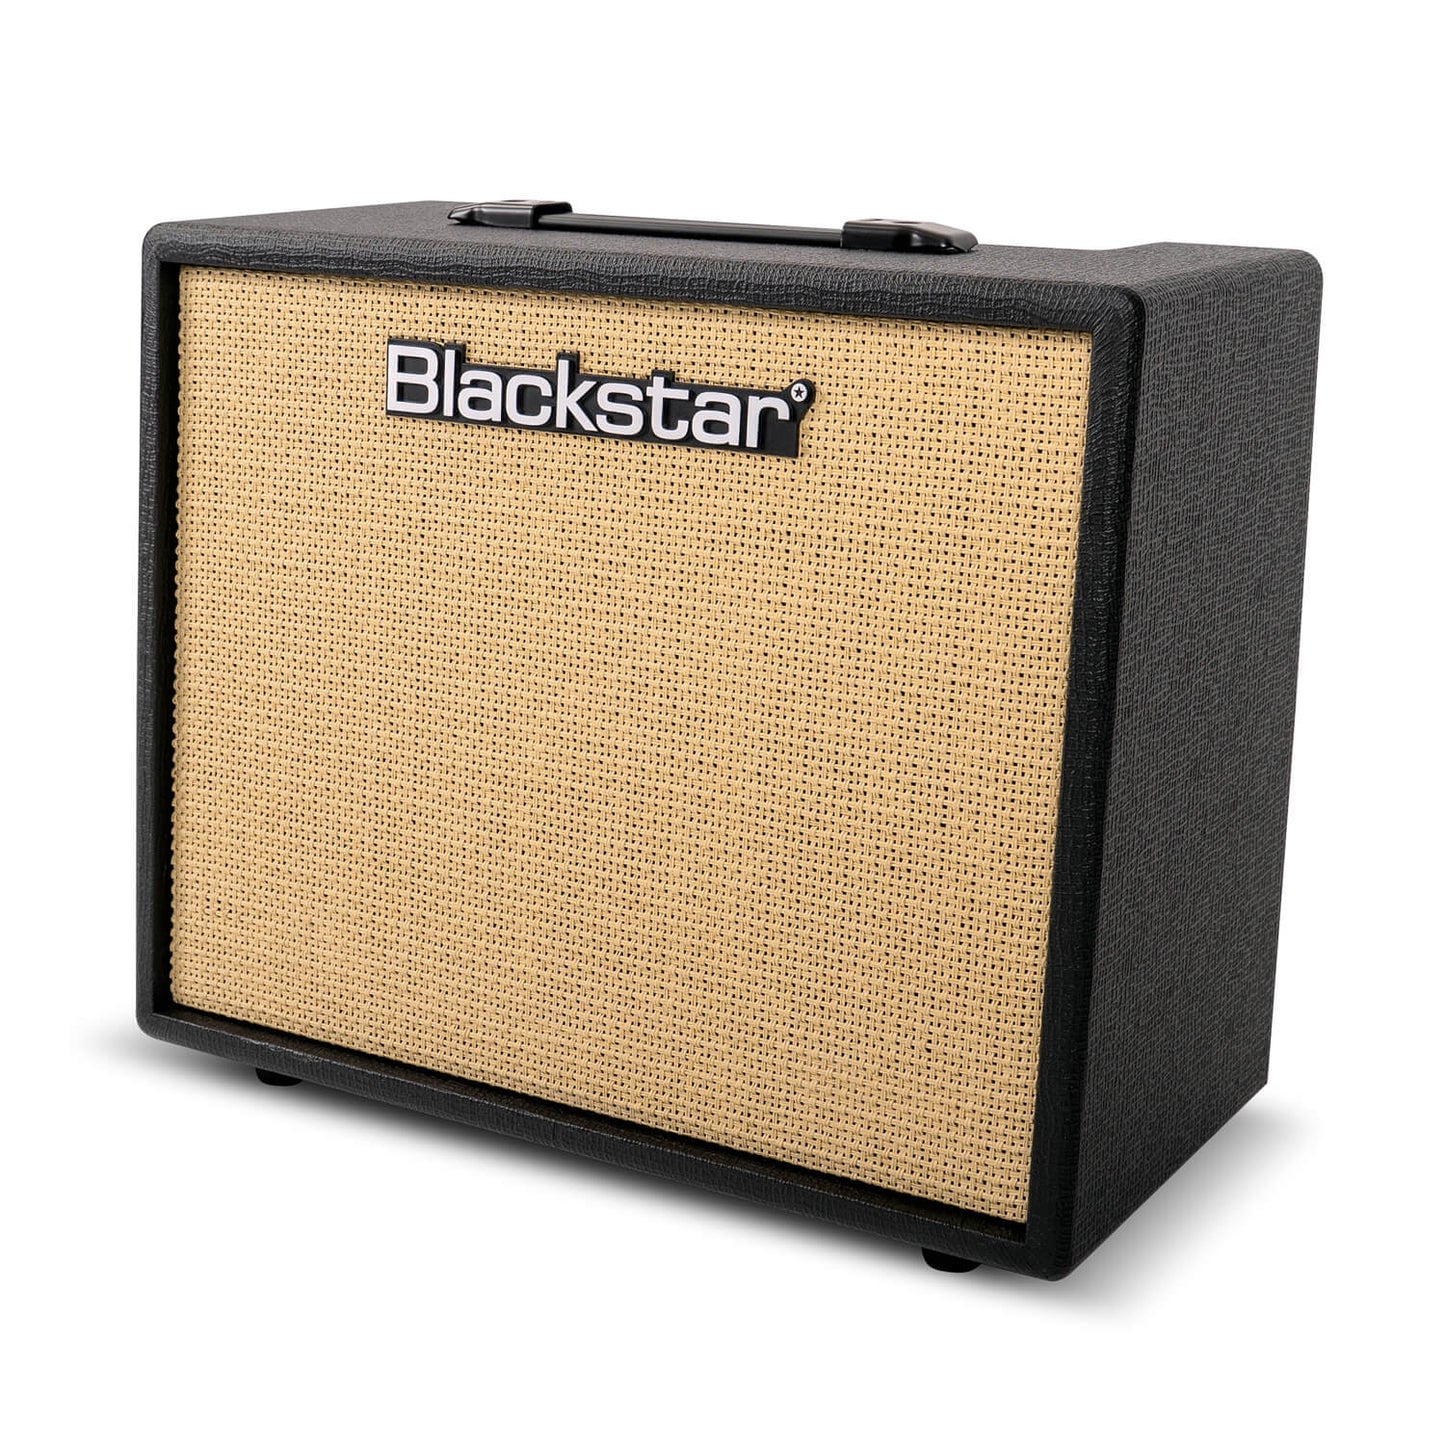 Blackstar Debut 50R Guitar Amplifier - Black & Cream (Each)